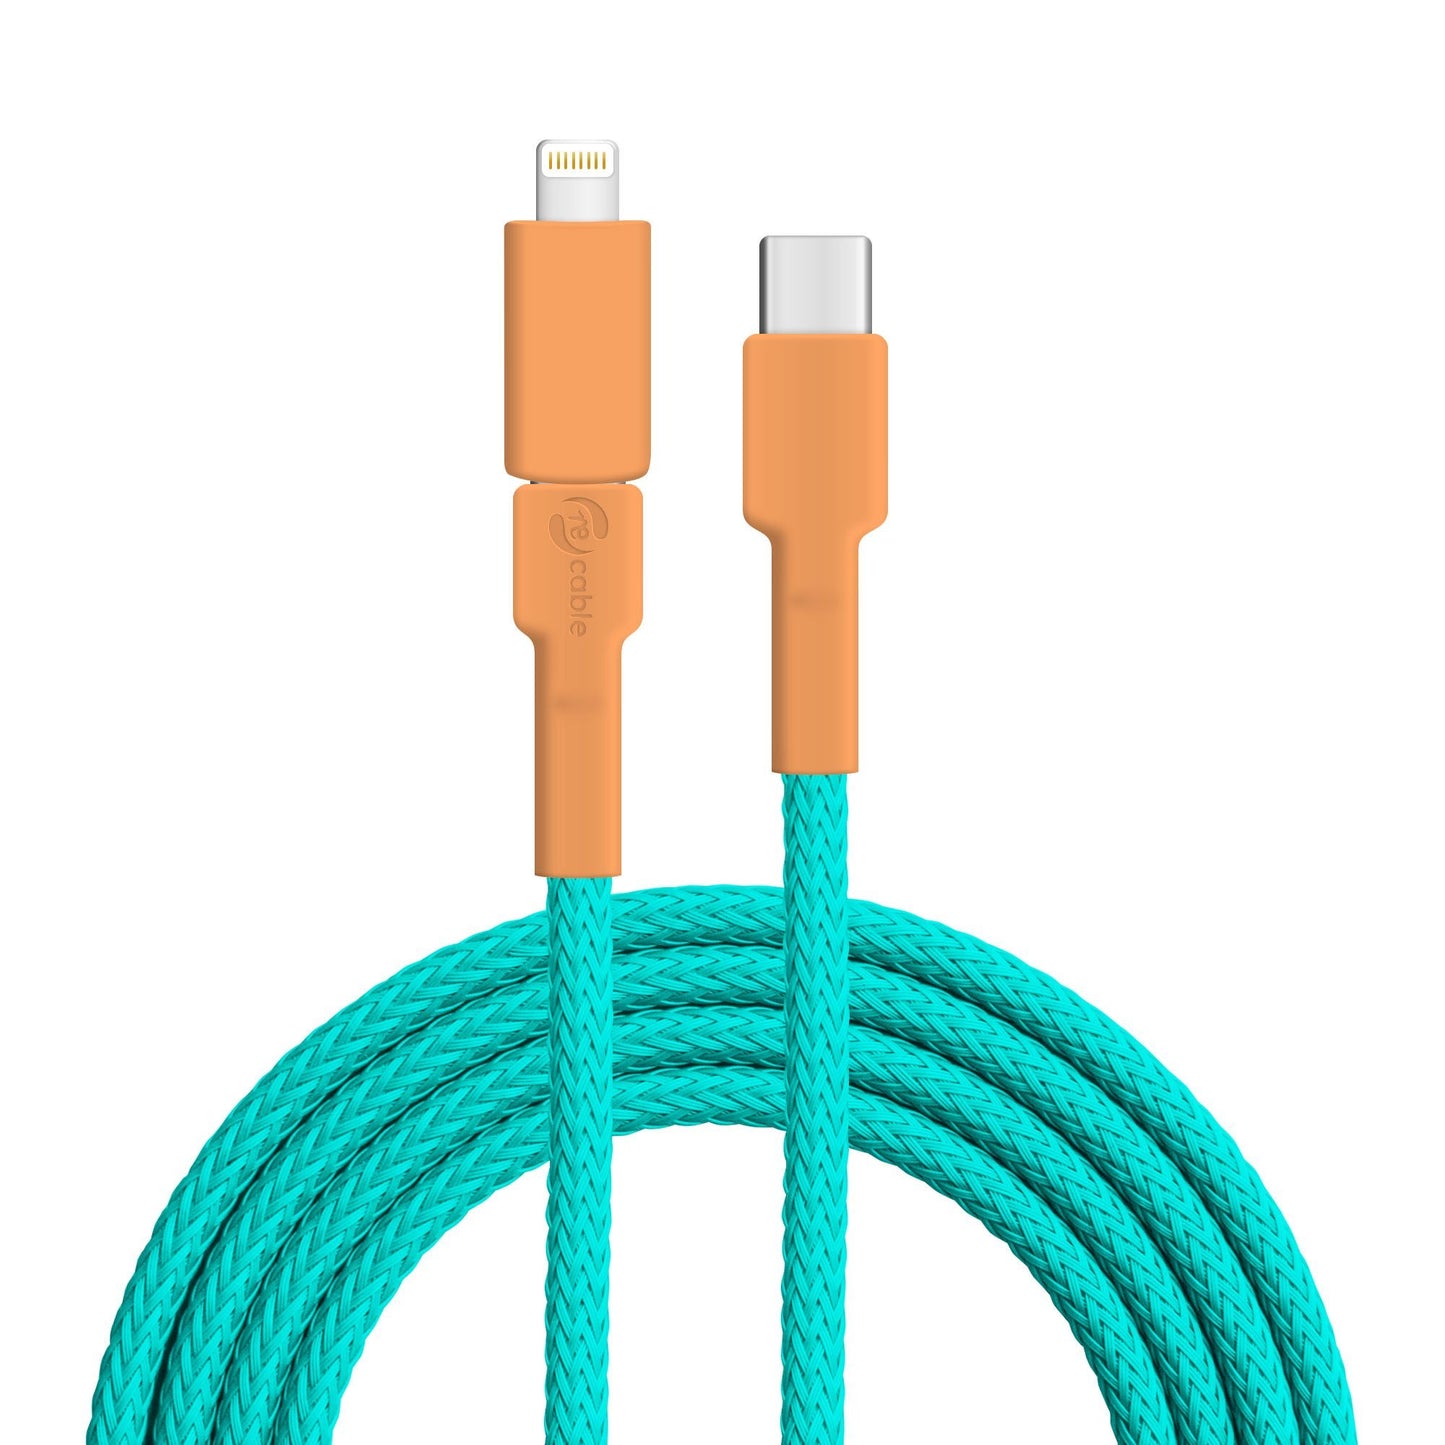 USB-Kabel, Design: Eisvogel, Anschlüsse: USB C auf Micro USB mit Lightning Adapter (verbunden)